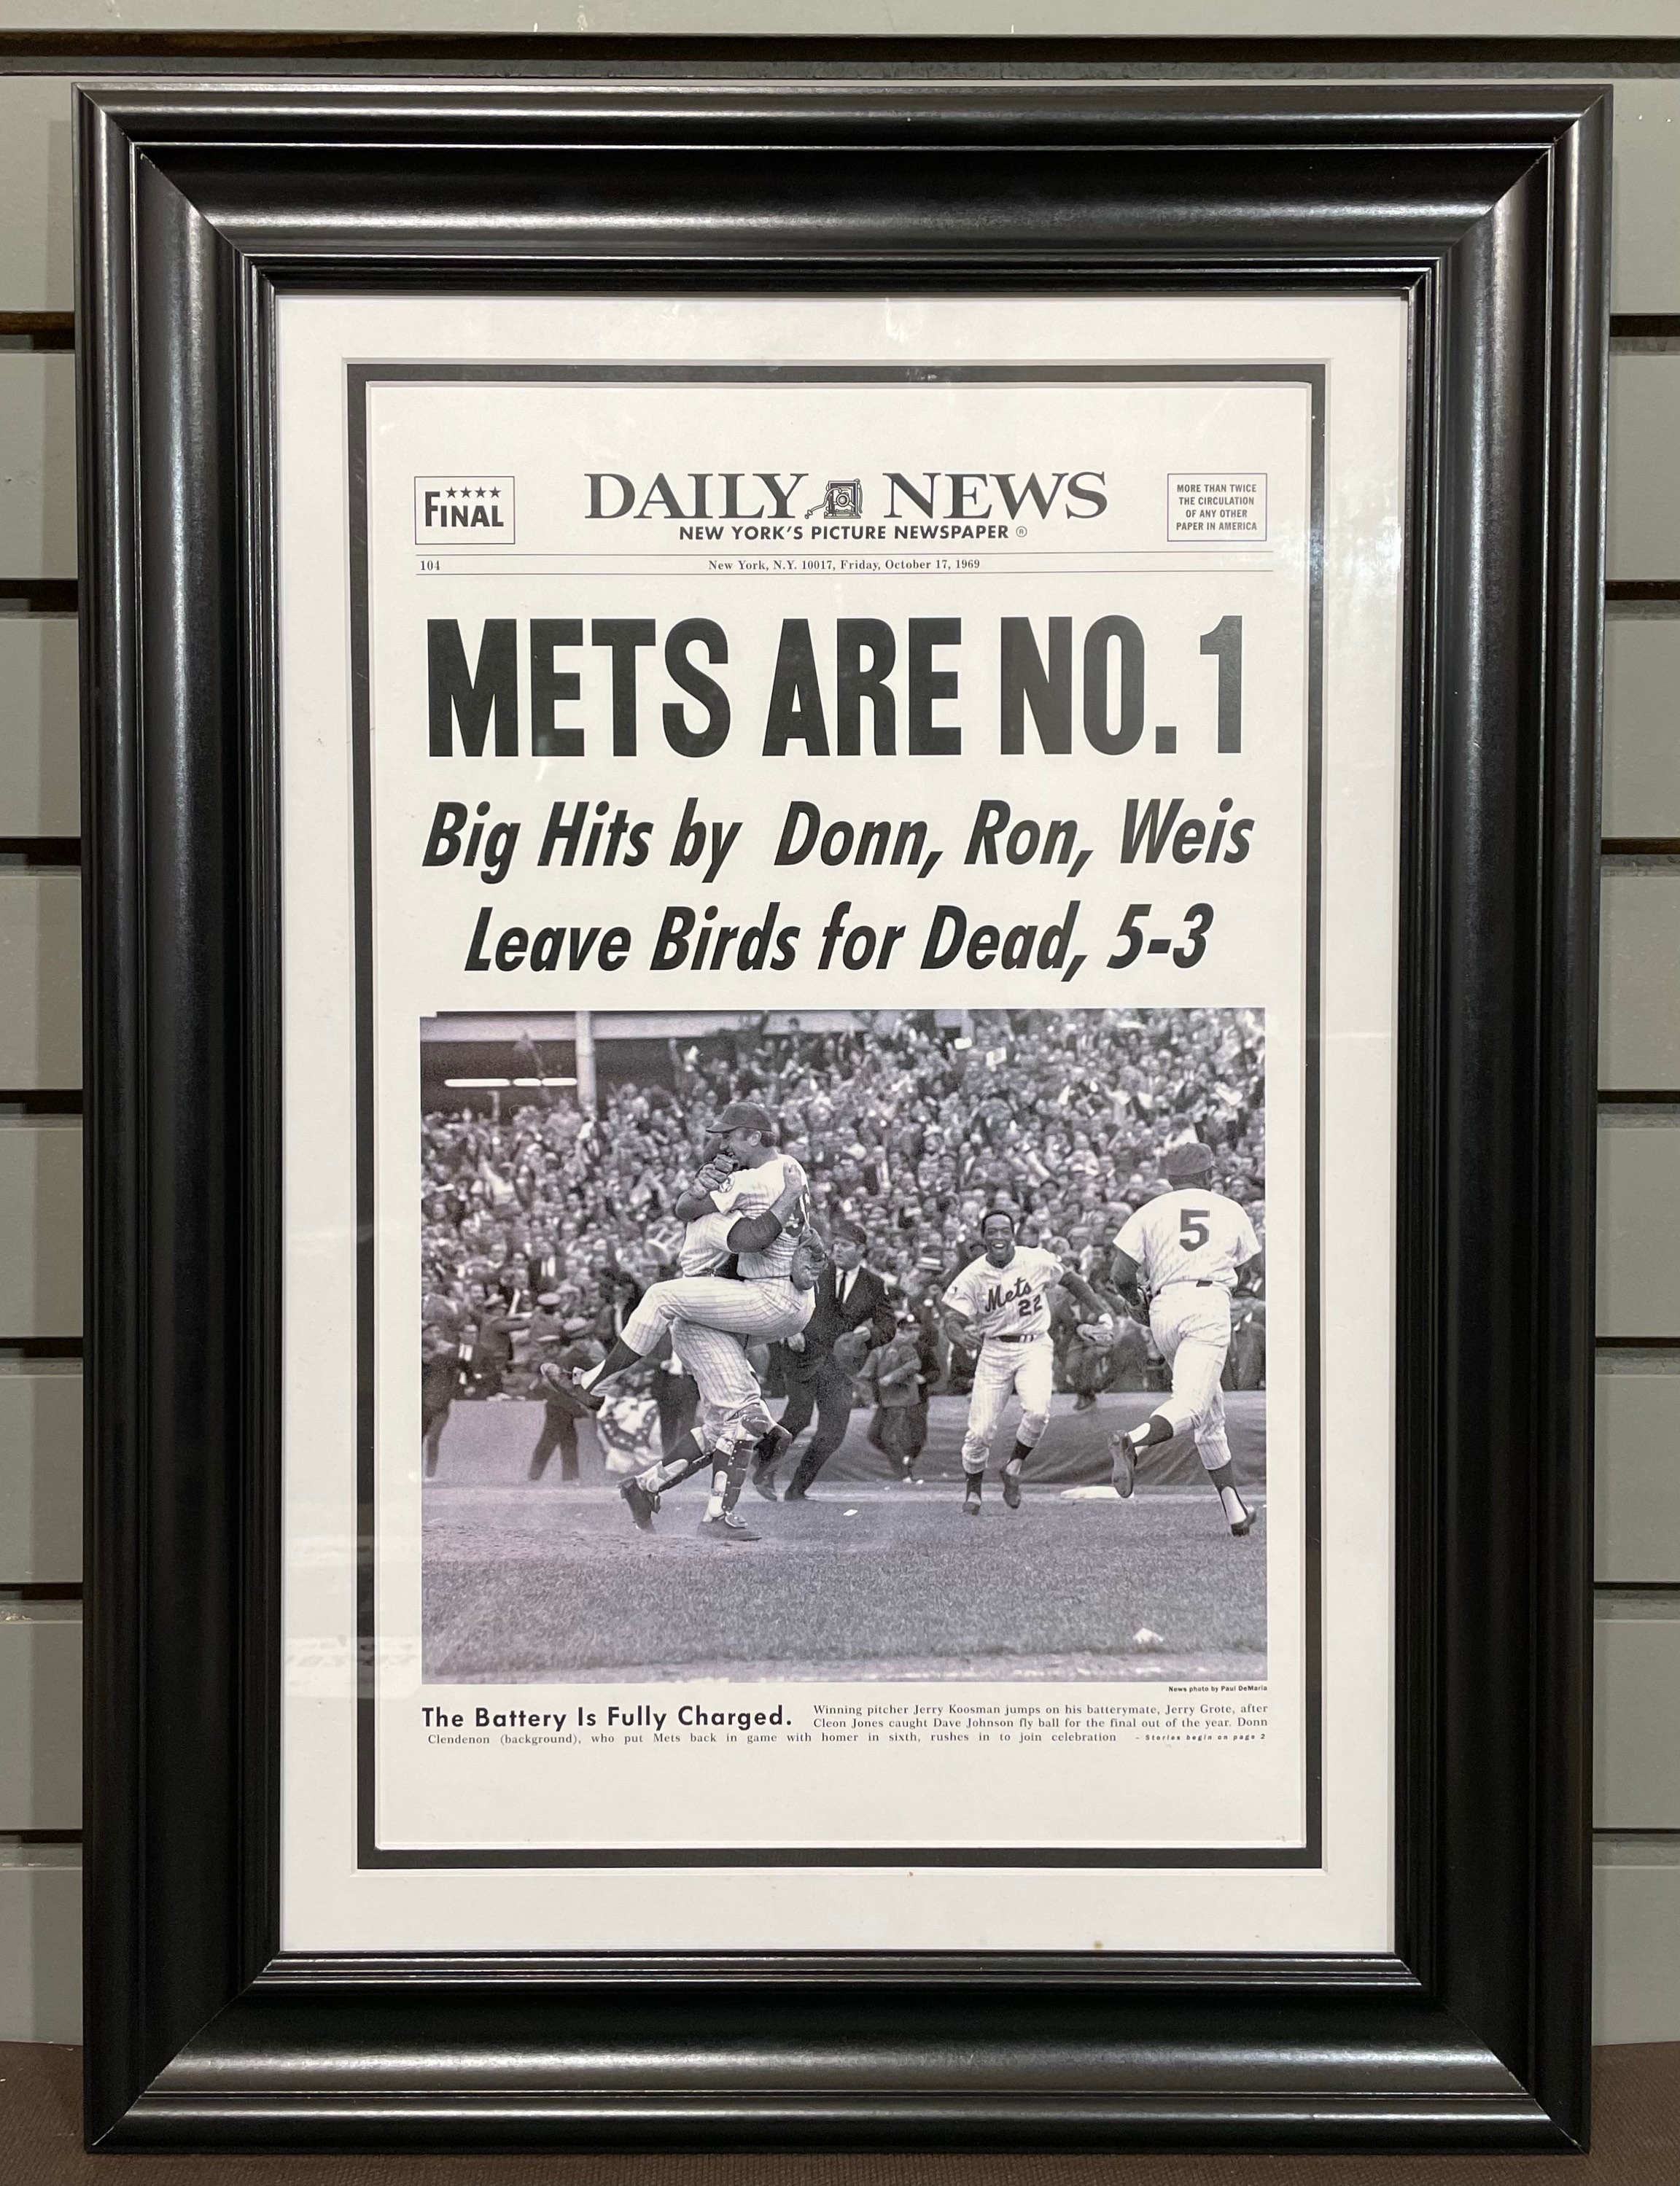 1969 Mets Yearbook Page Featuring Cleon Jones - Mets History